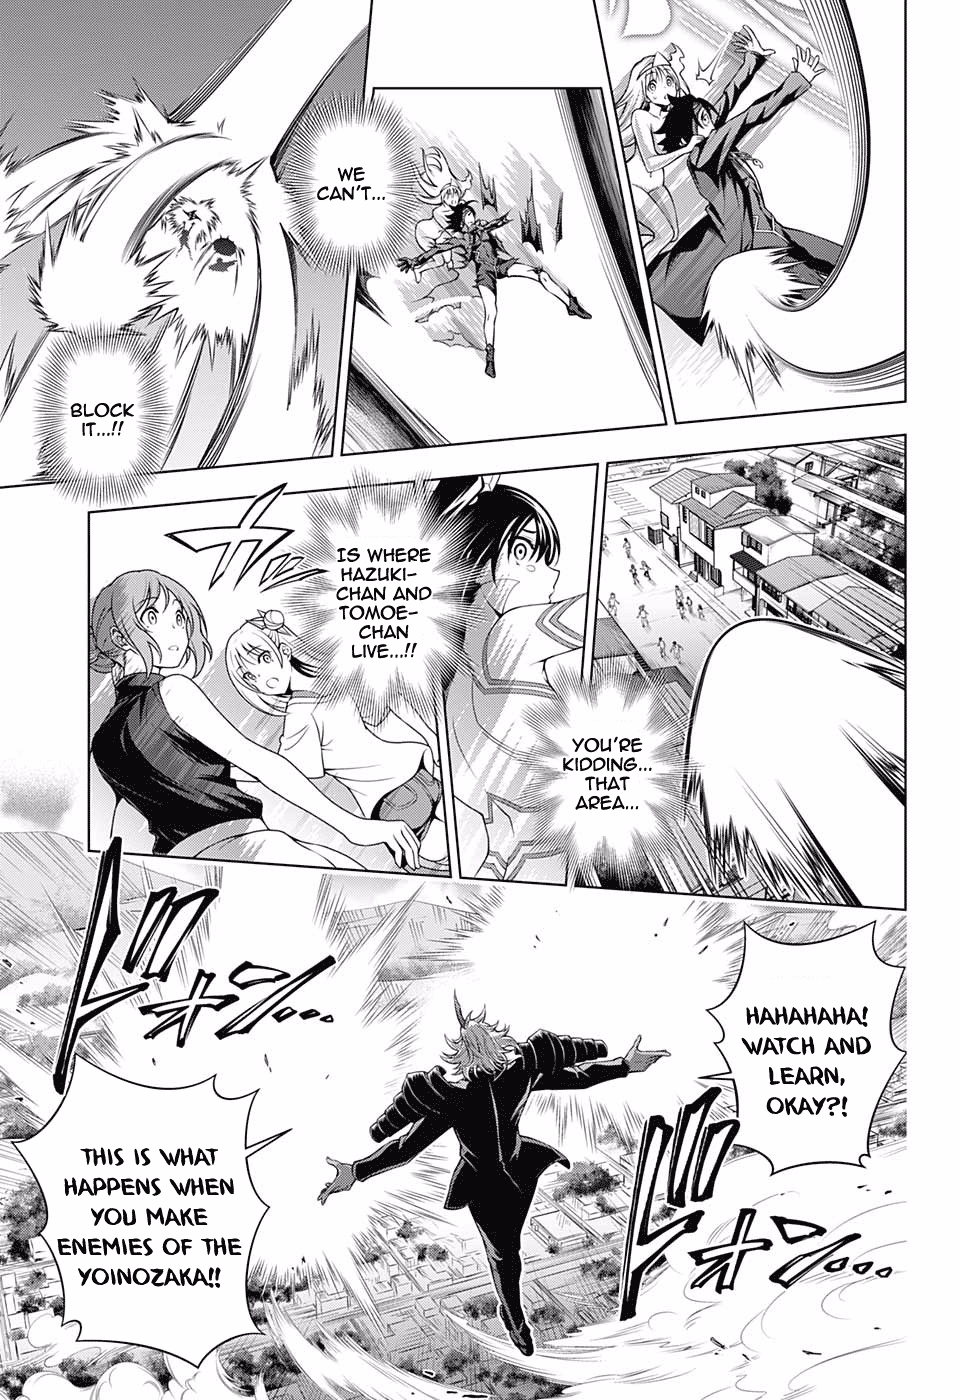 Kiyoe on X: Yuragi-sou no Yuuna-san #21 [Manga] – Apr 3, 2020